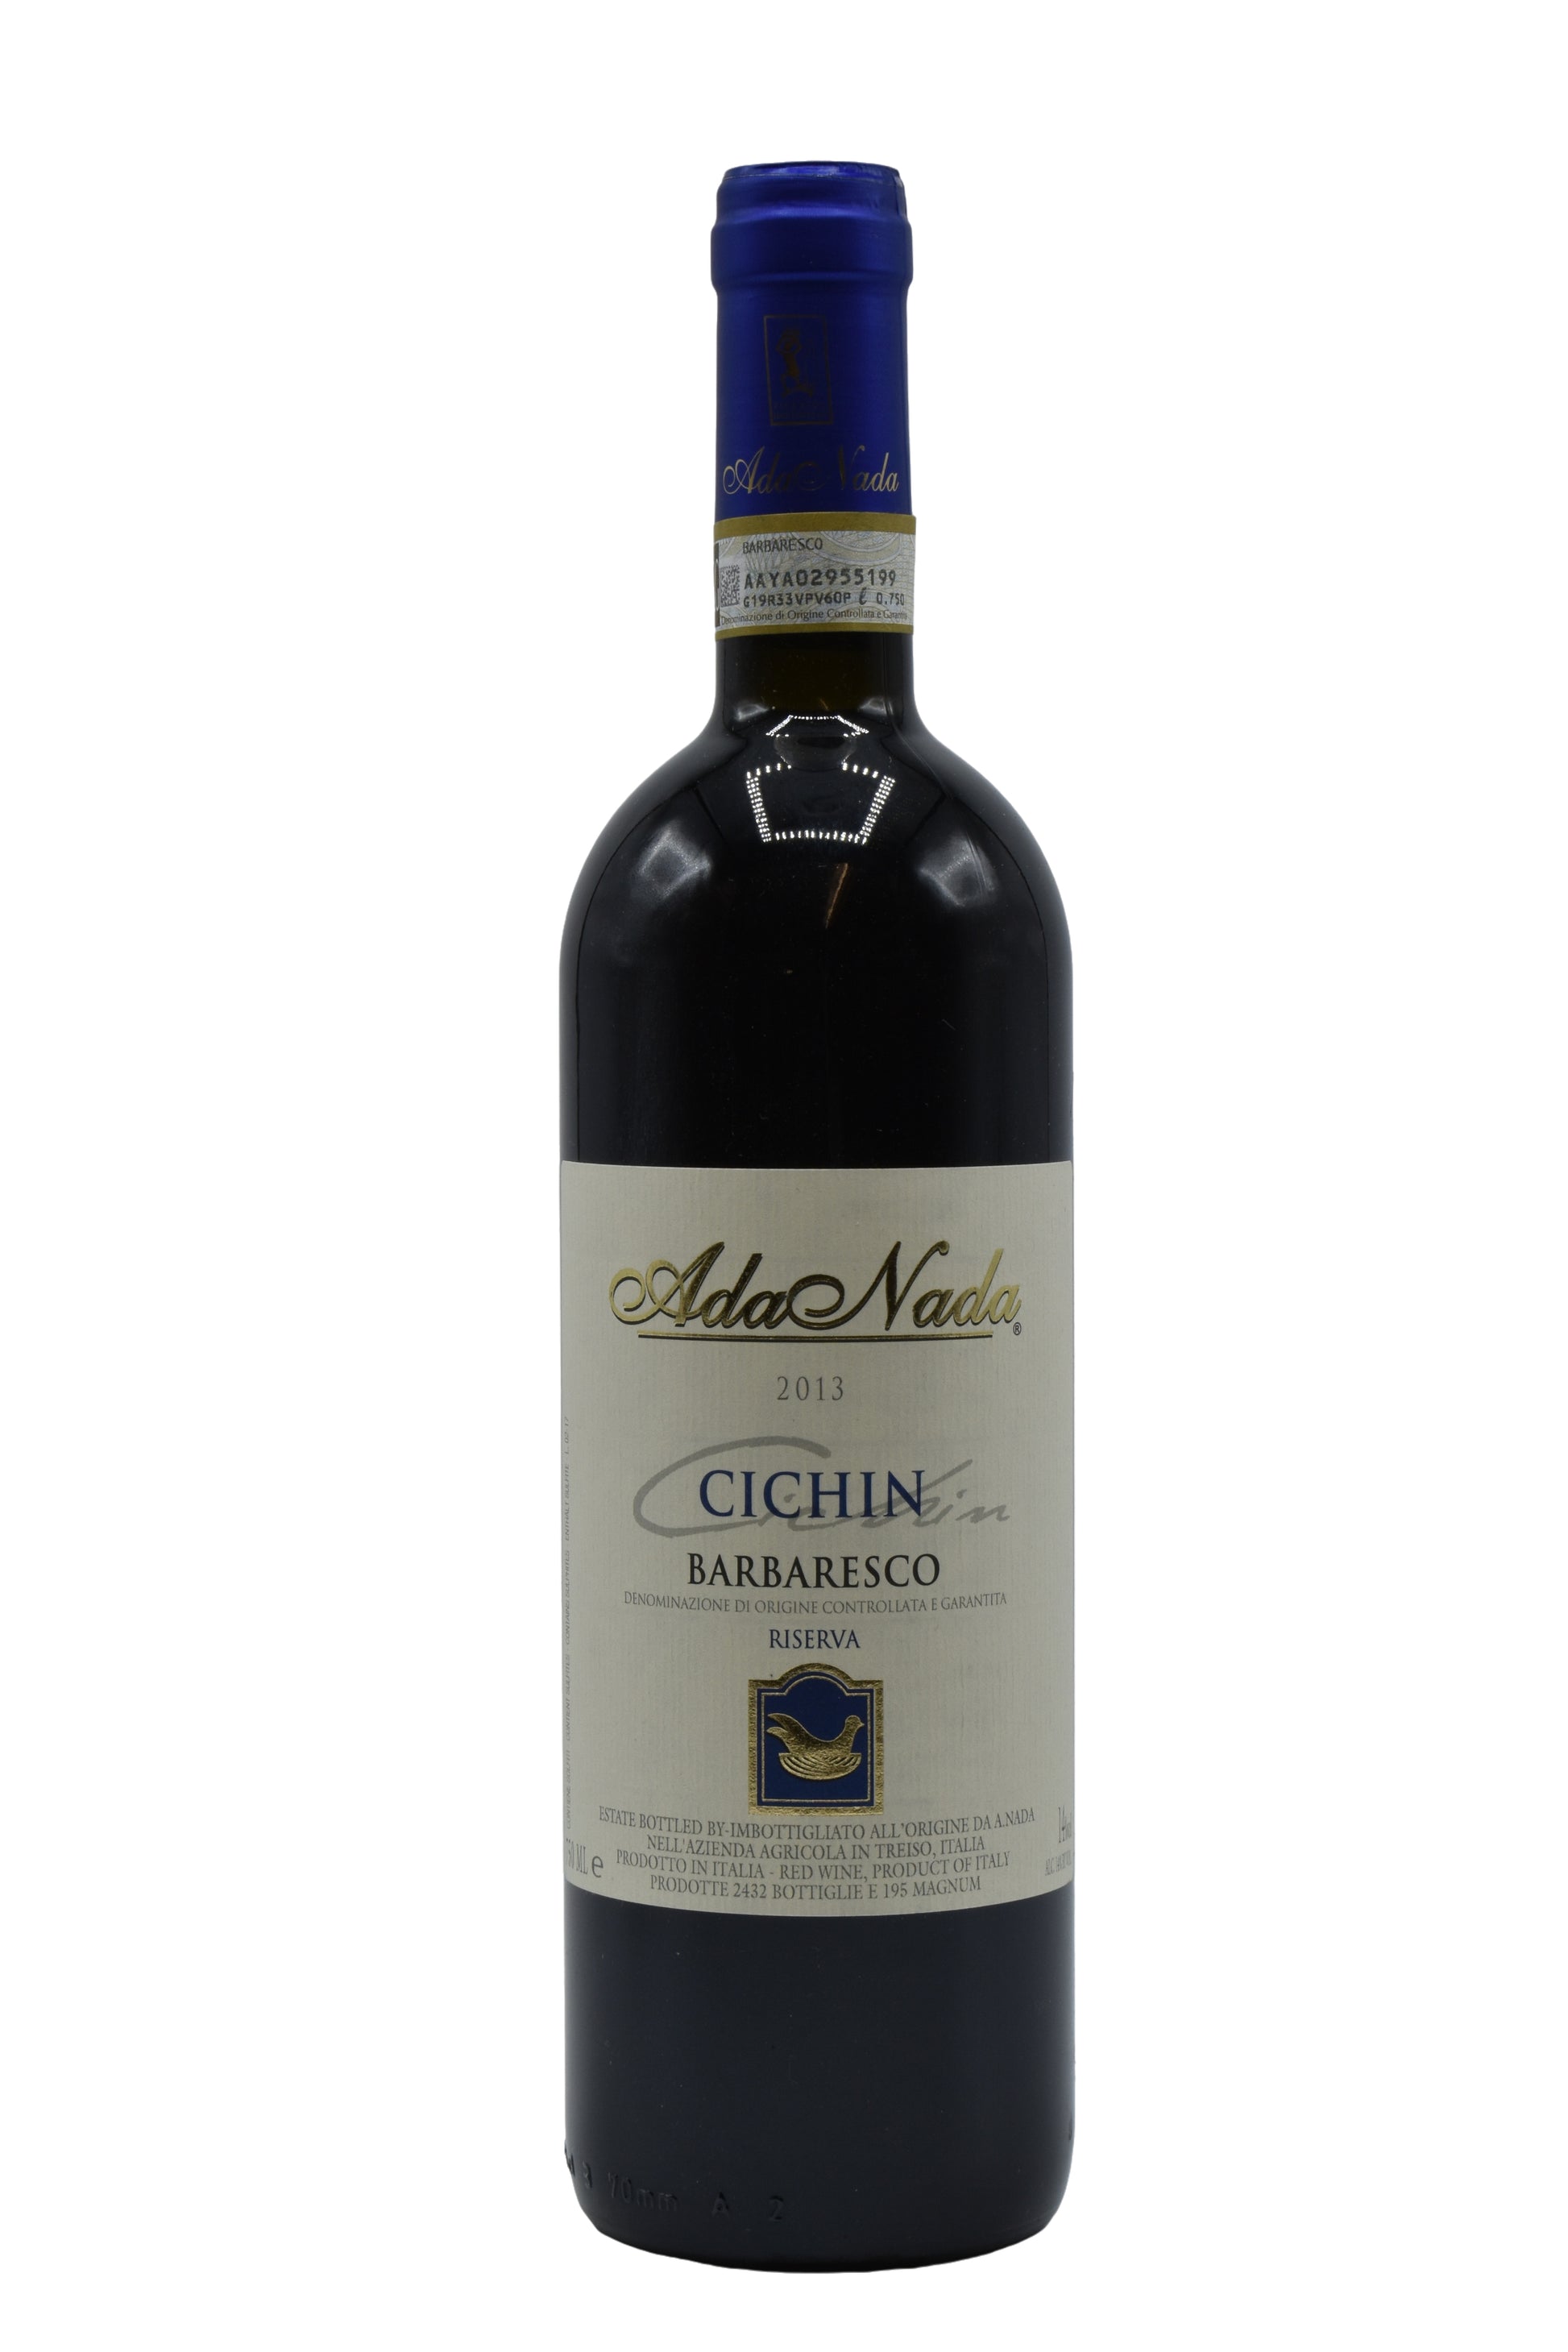 2013 Ada Nada, Barbaresco, Cichin Riserva 750ml - Walker Wine Co.